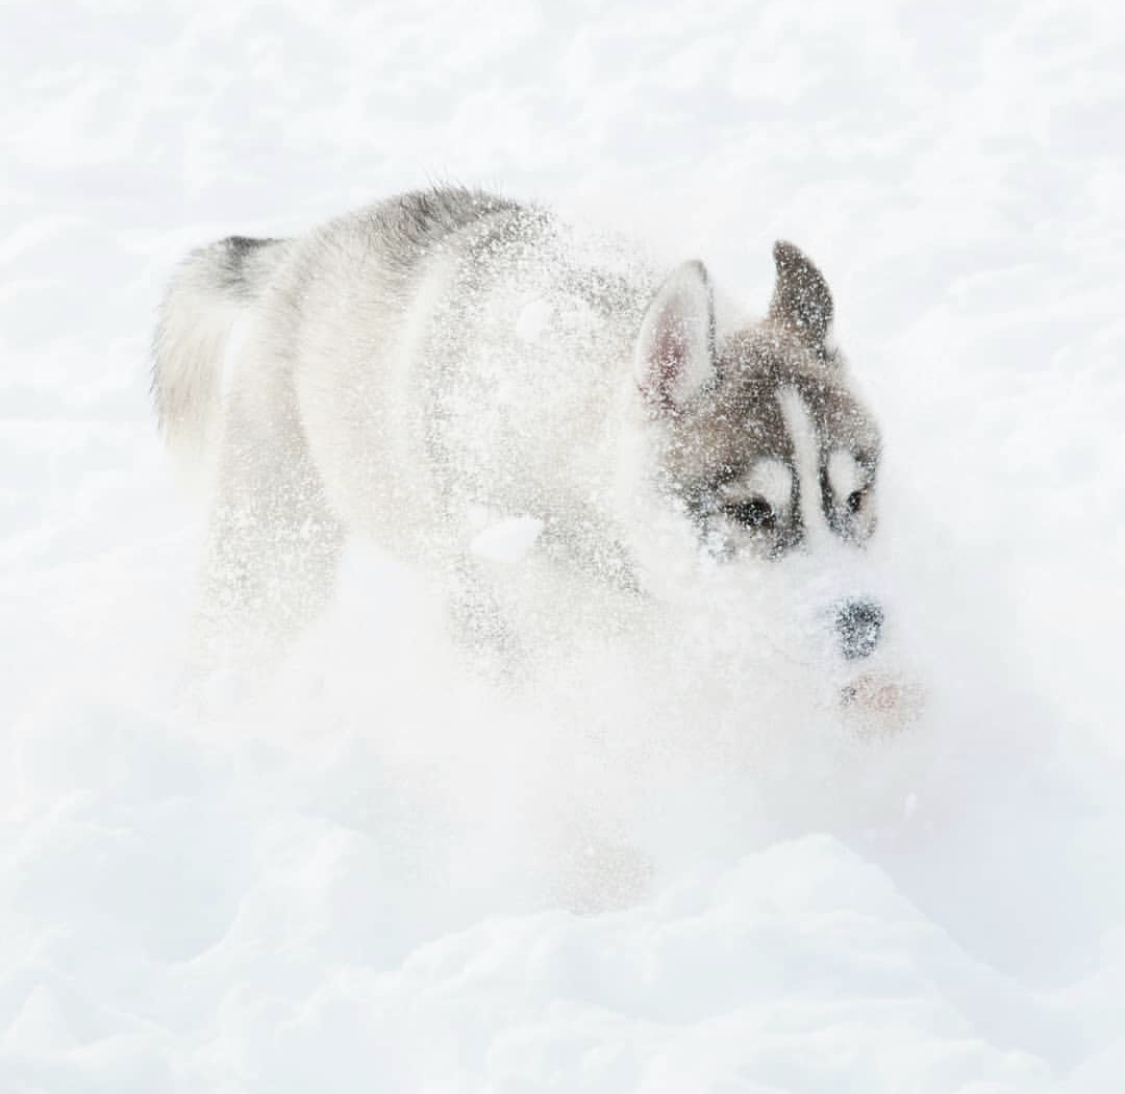 A Husky Puppy running in snow